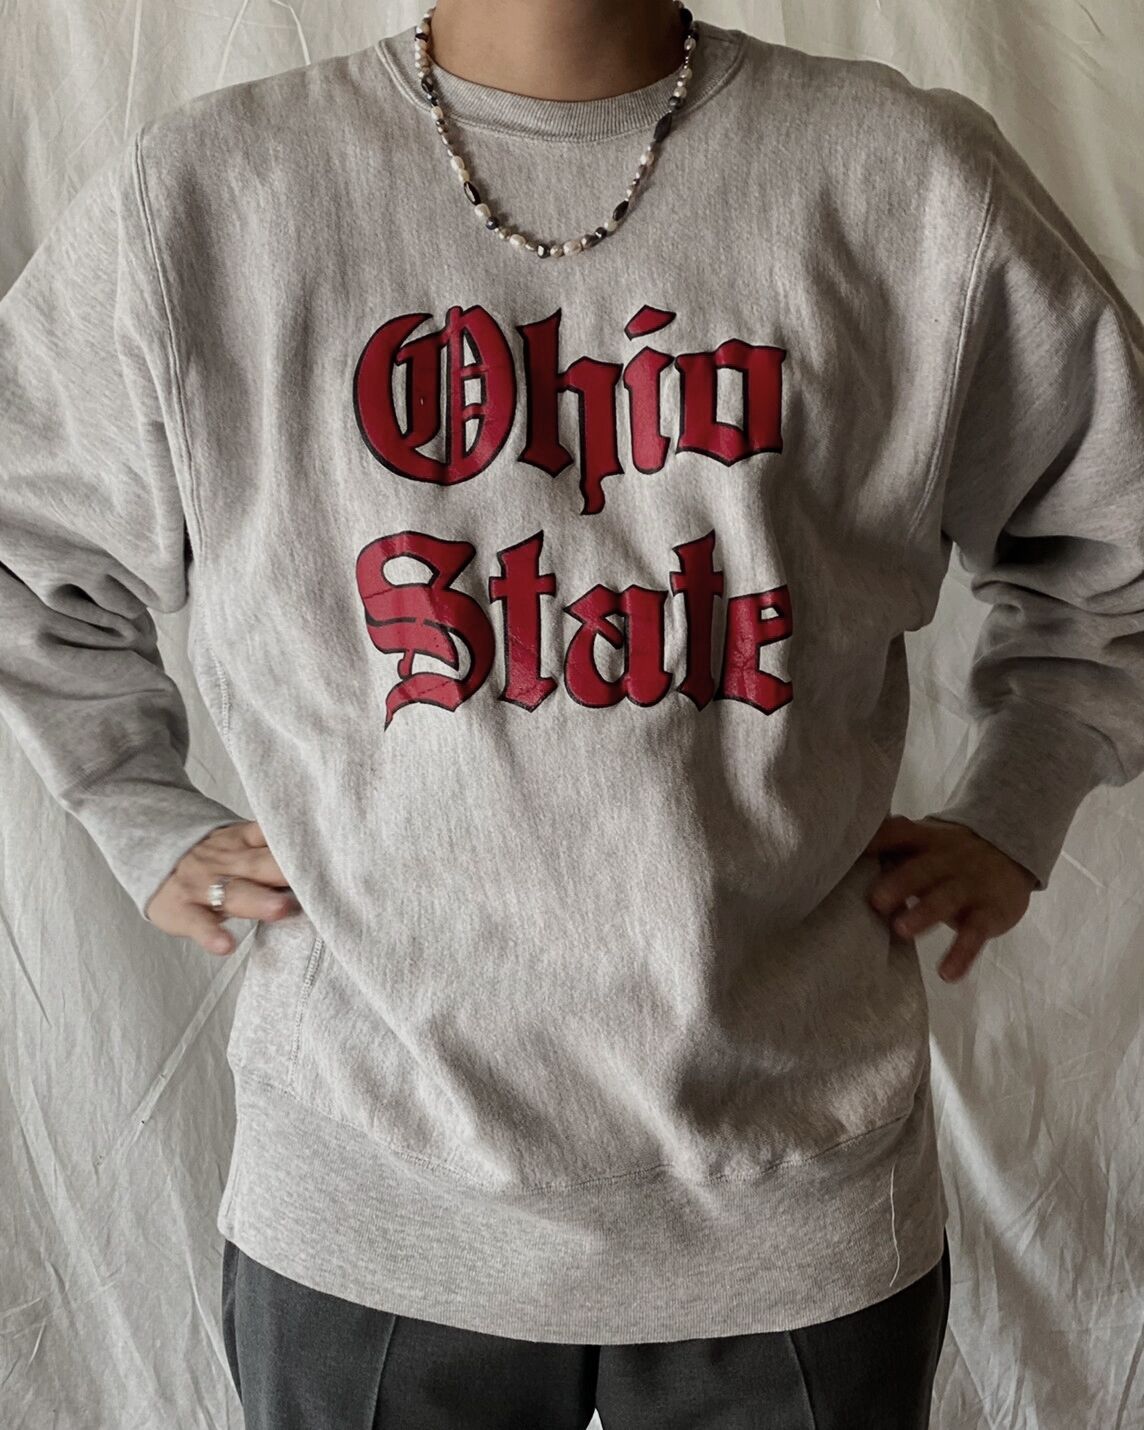 80s champion Ohio State reverse weave